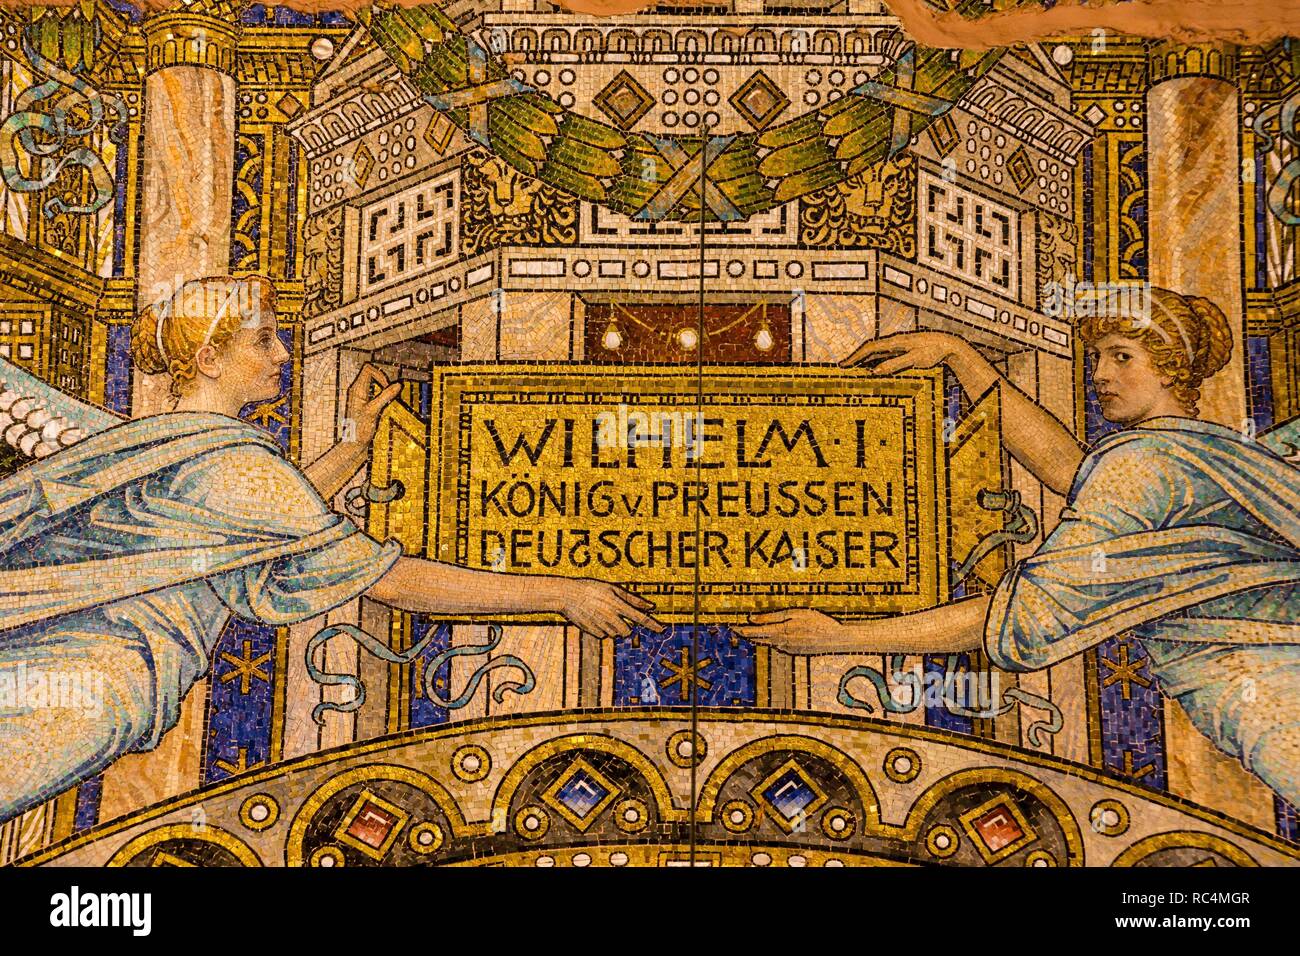 mosaicos representando a la familia Hohenzollern, iglesia evangélica luterana Kaiser-Wilhelm-Gedächtniskirche, Kurfürstendamm ,Charlottenburgo, Berlin, Alemania, europe. Stock Photo